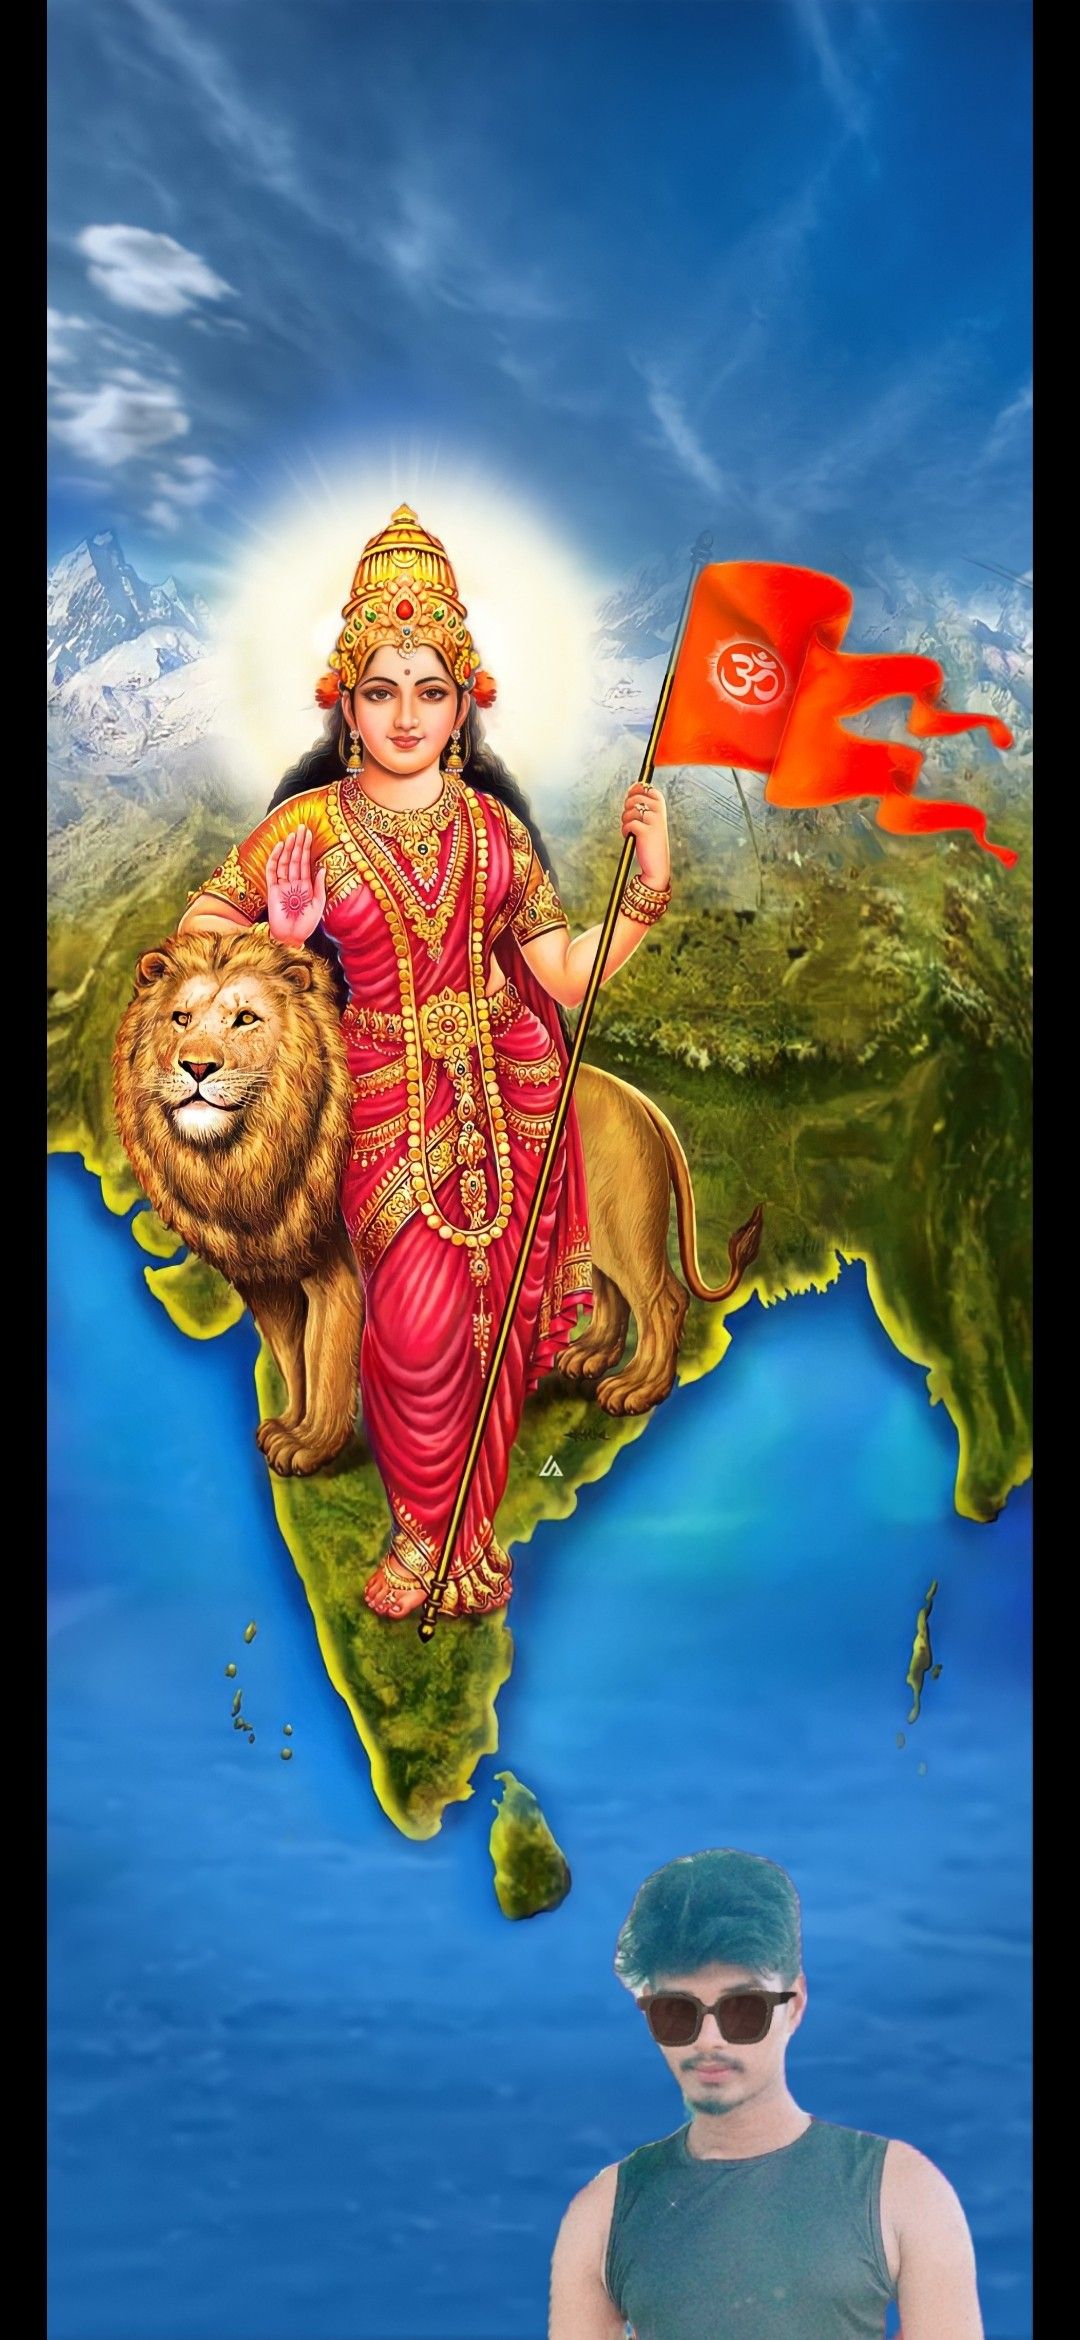 Bharat mata image wallpaper image